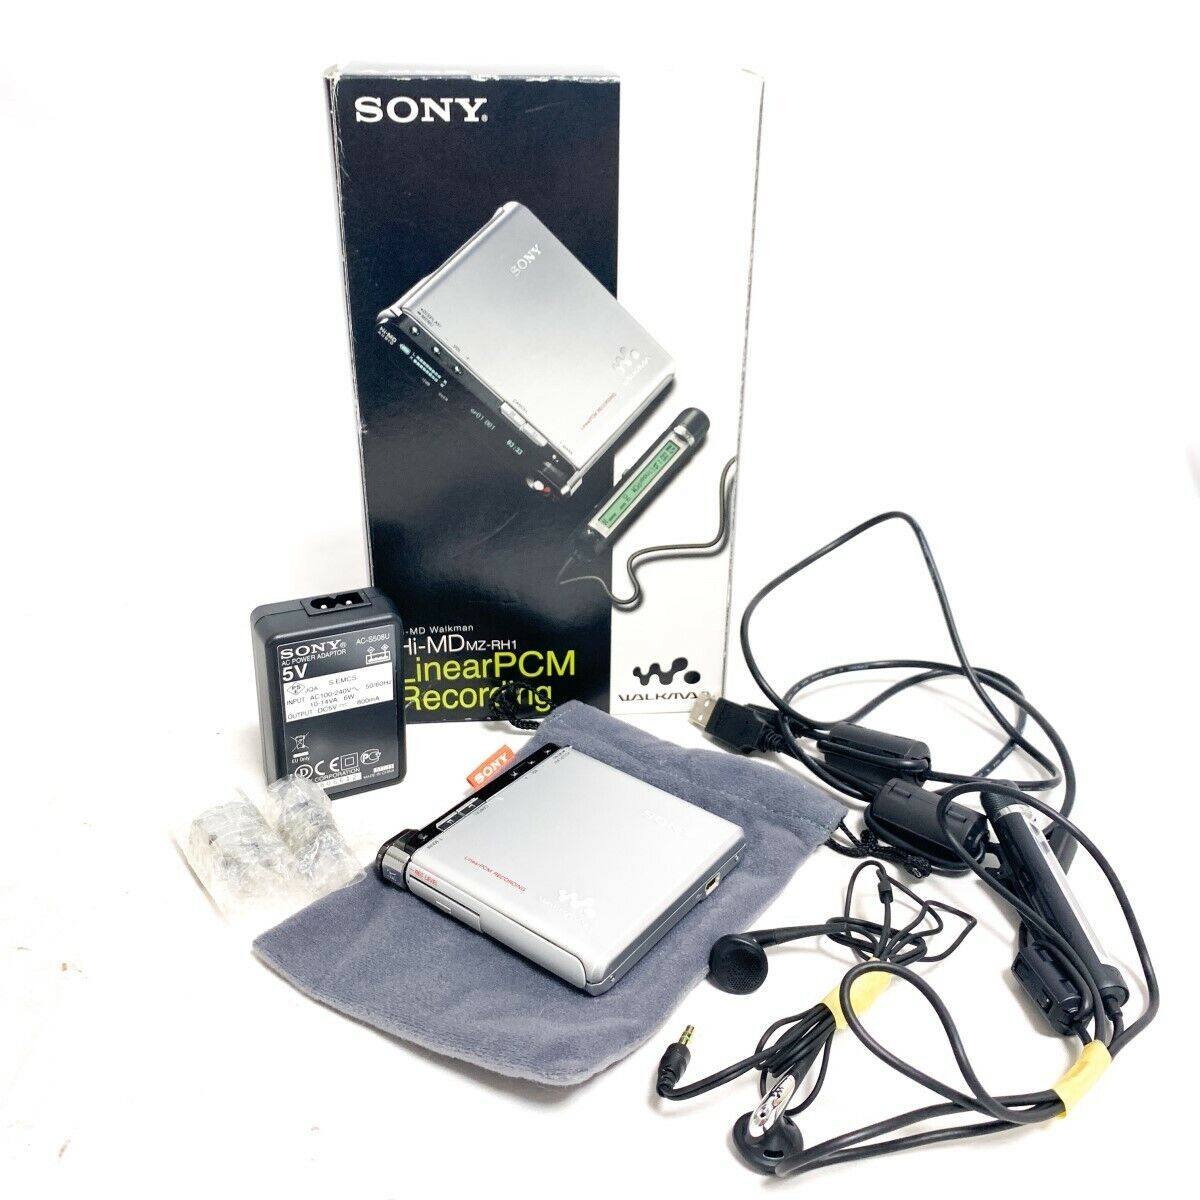 SONY Mz-Rh1 MiniDisc Recorder Player Hi-MD Walkman Minidisc Mp3 Digital Box